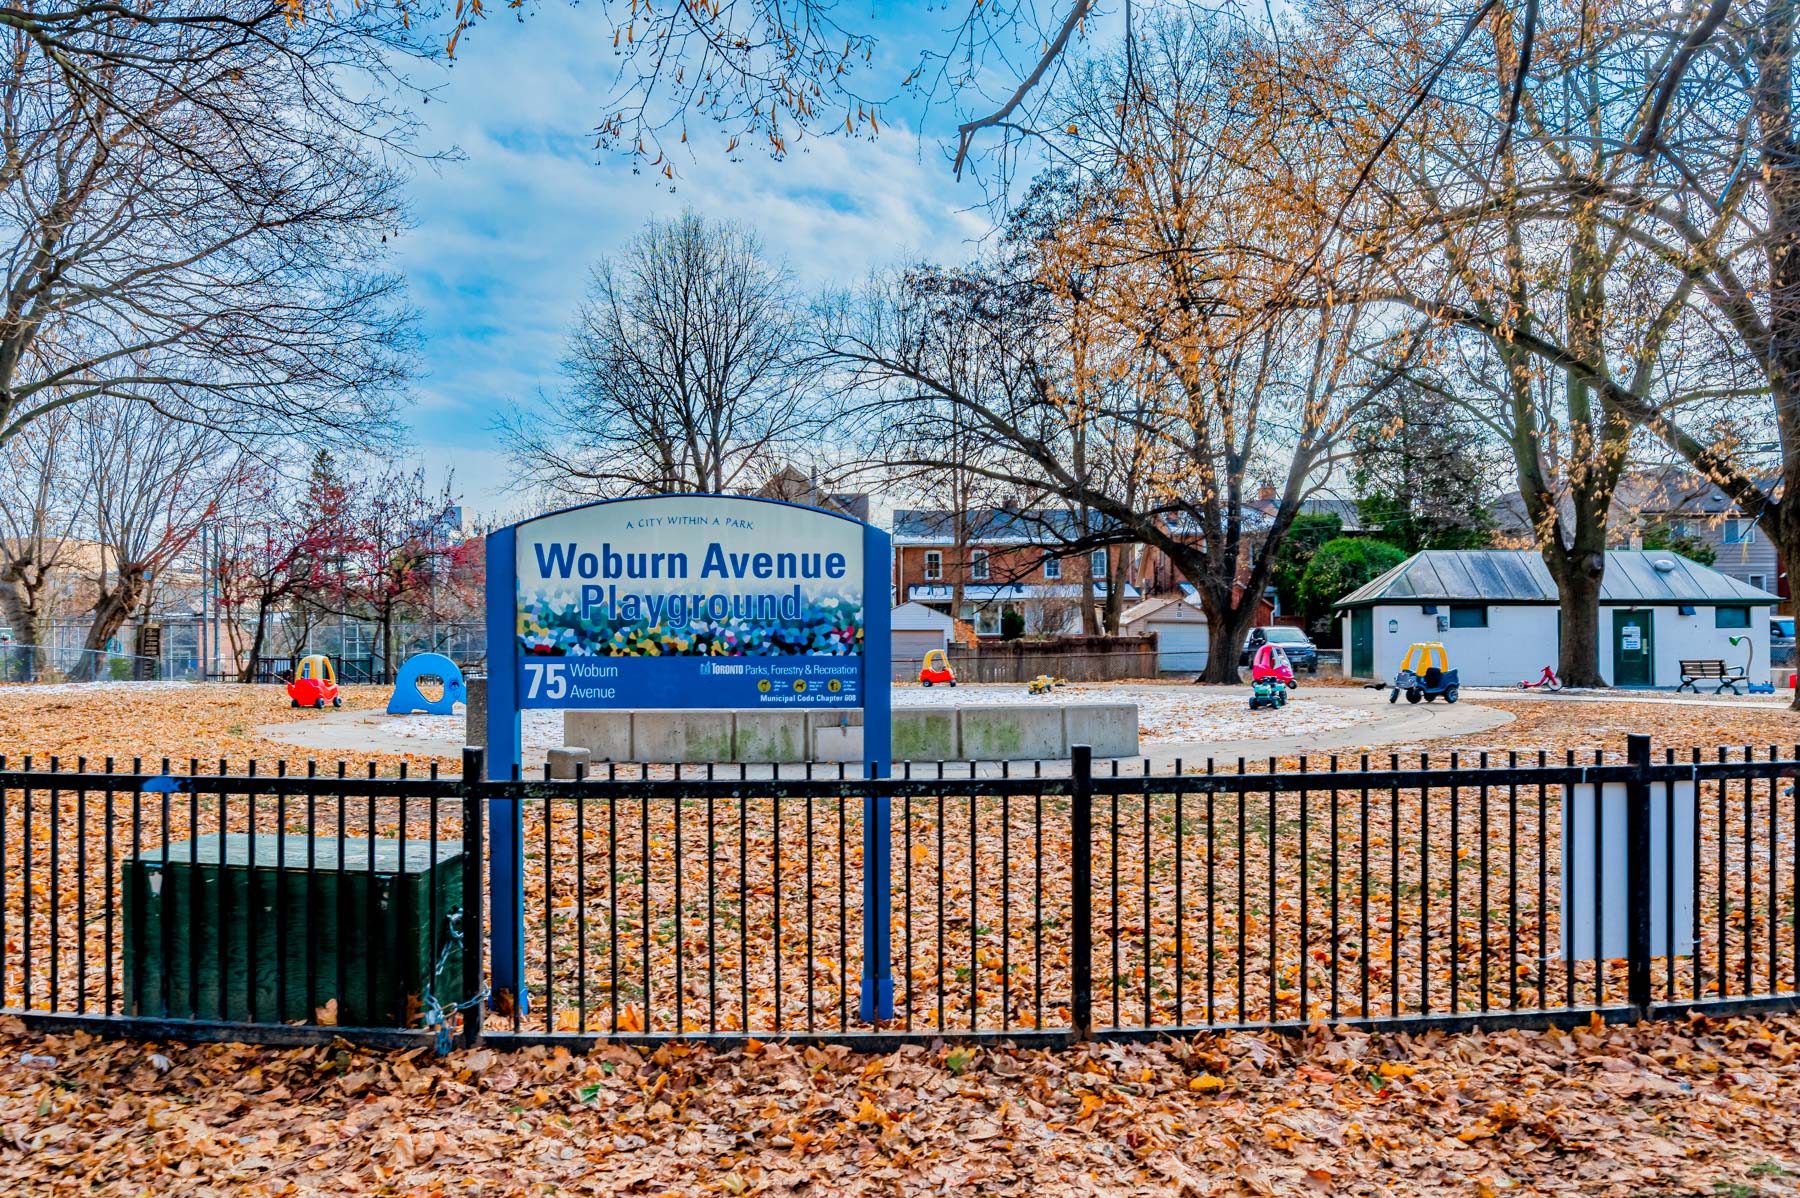 Iron fence, sign, trees and playground – Woburn Ave Playground.